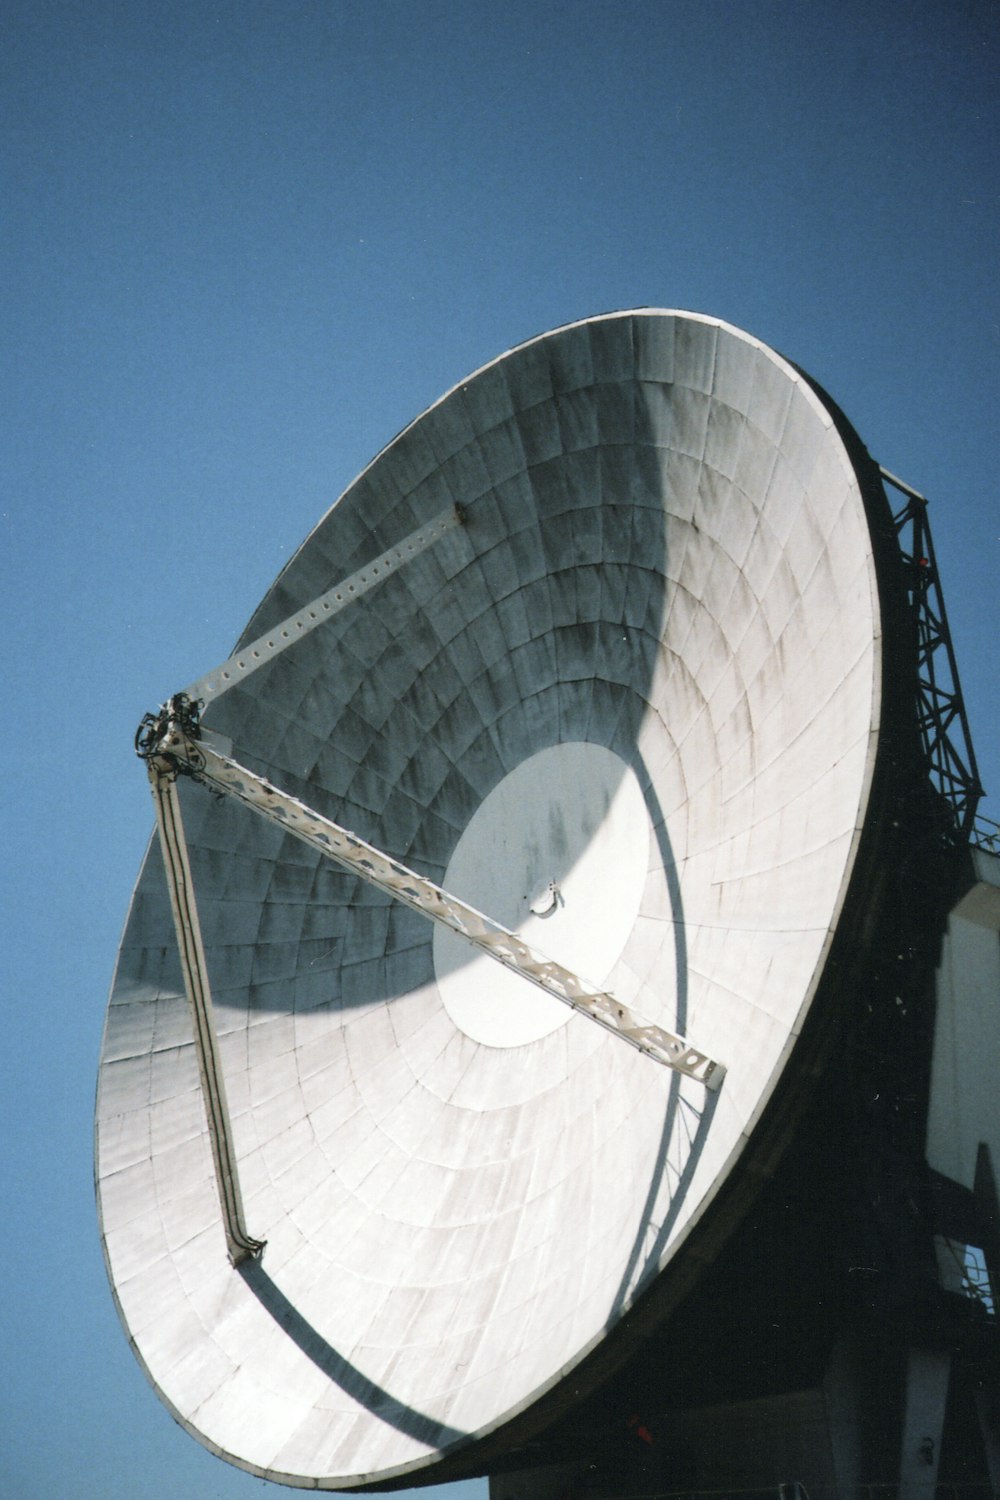 white satellite dish under blue sky during daytime